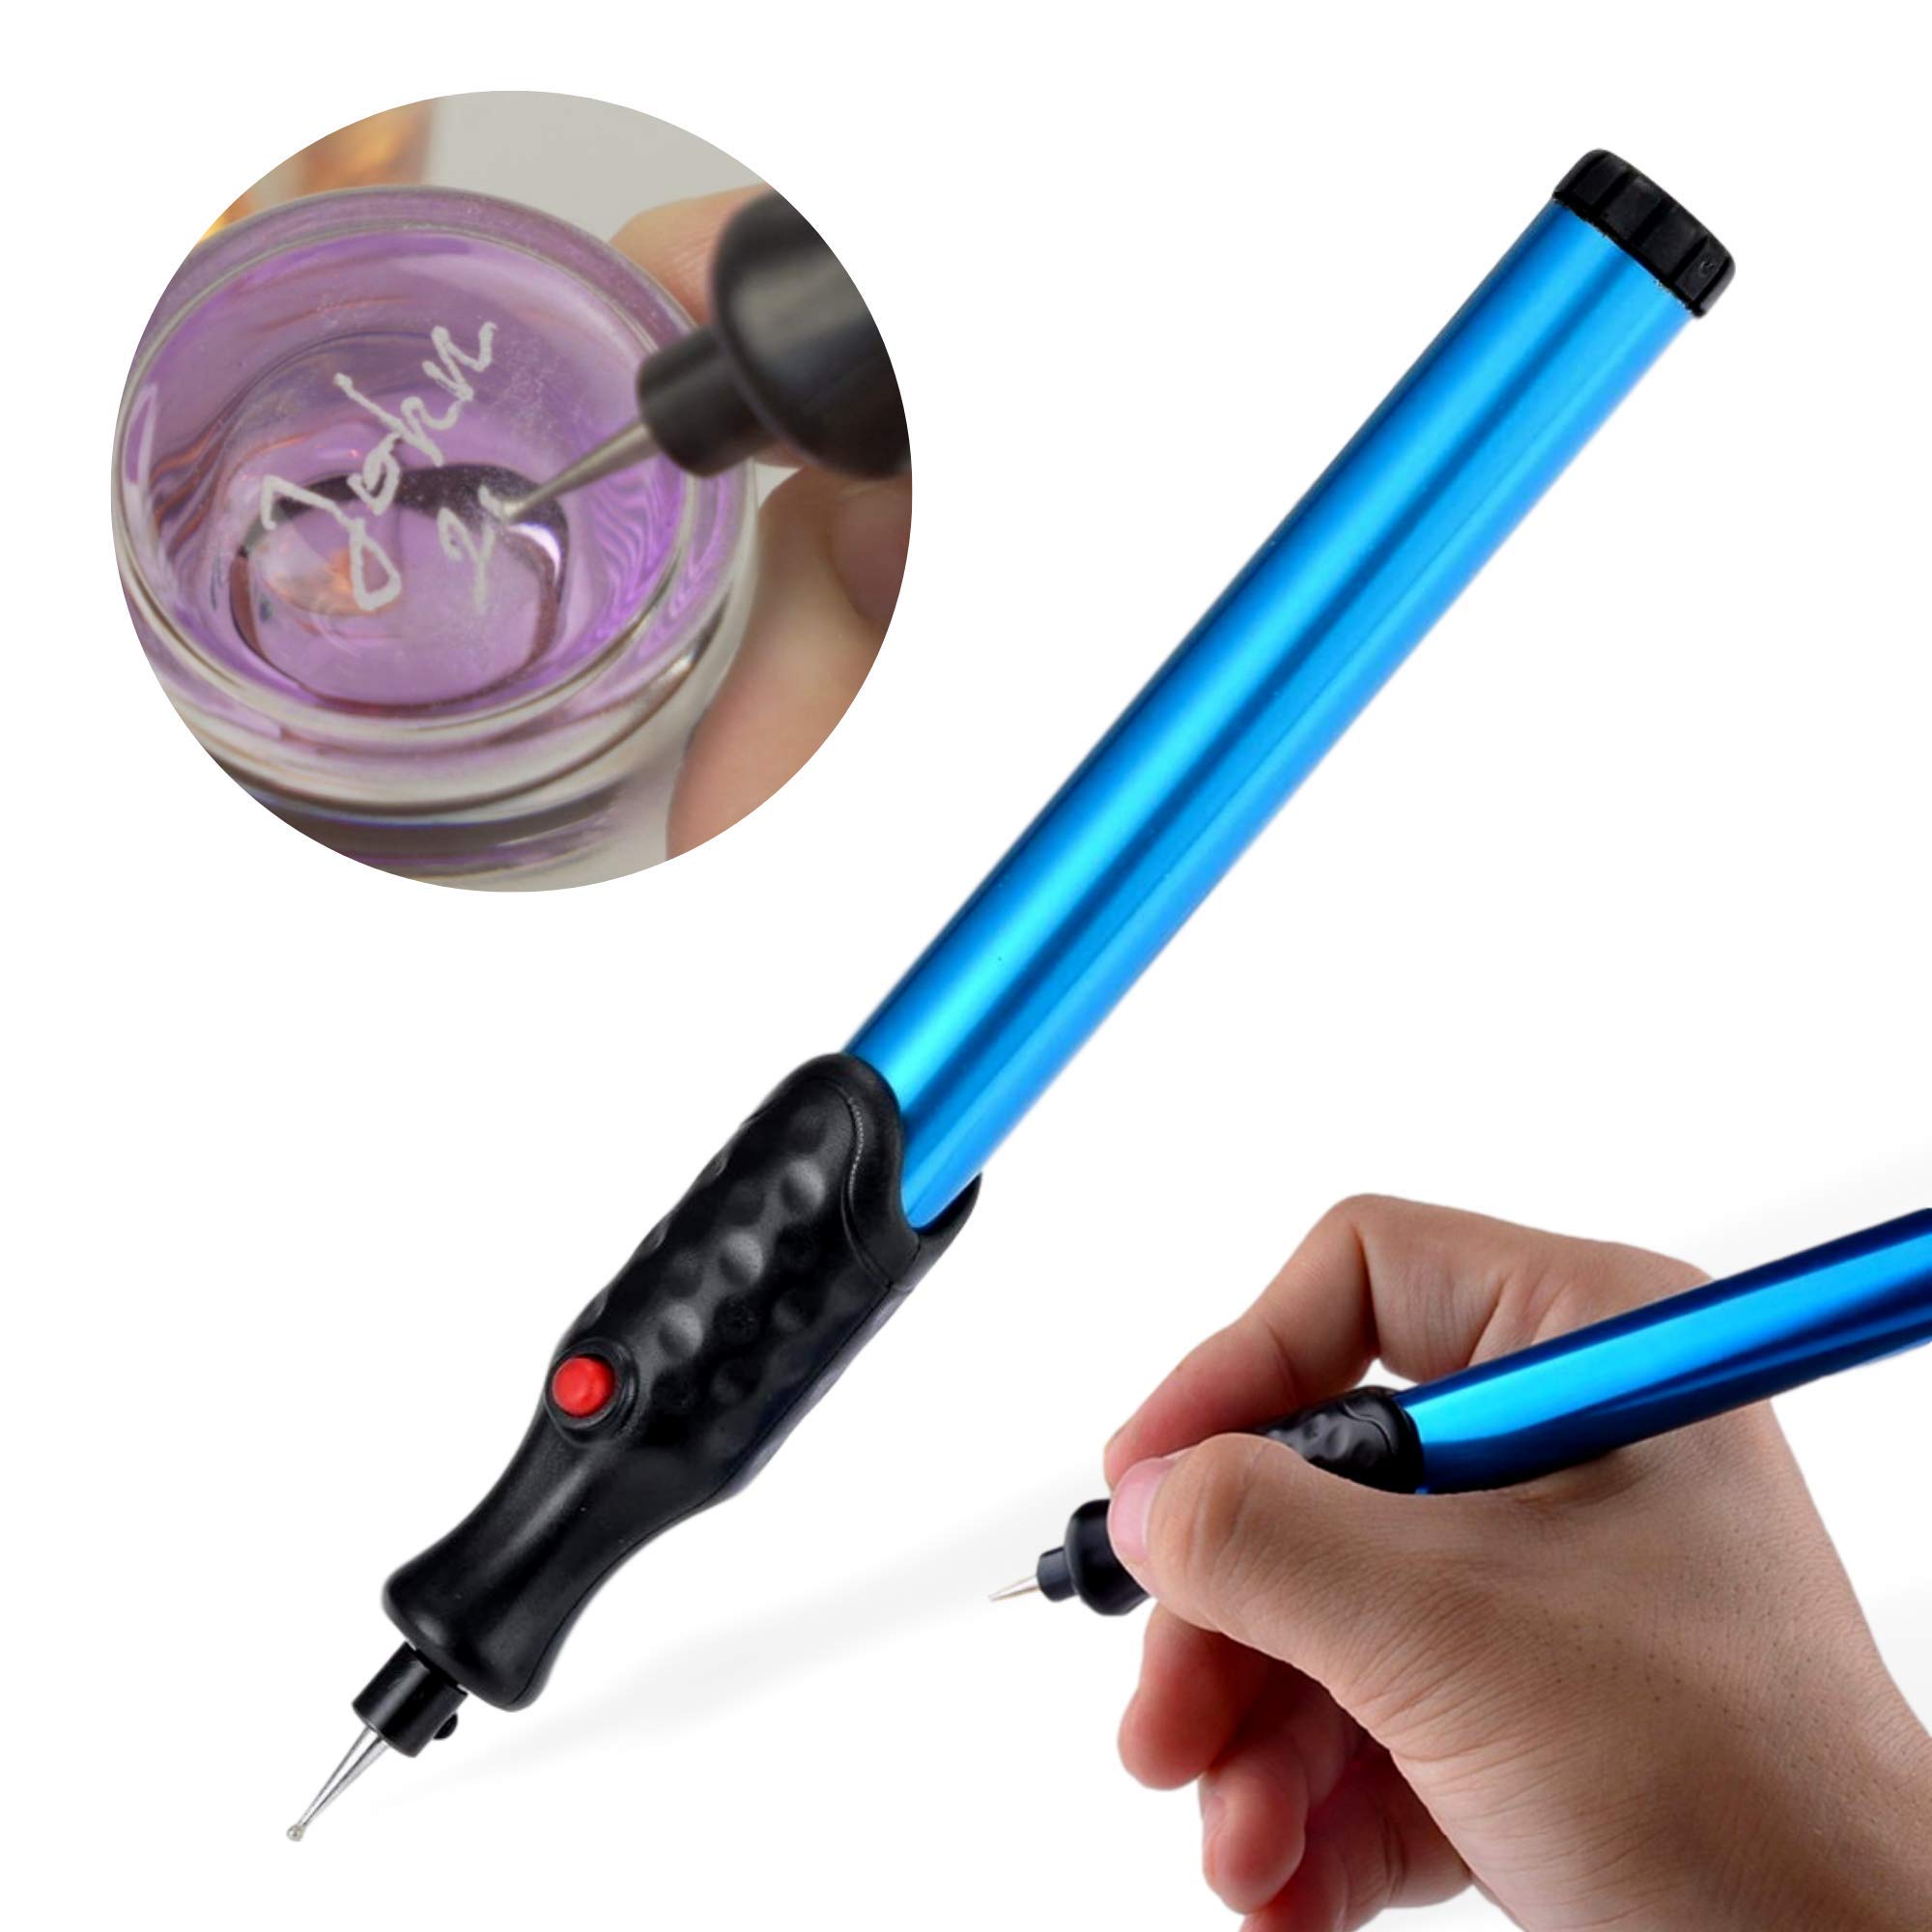 Customizer™ Engraving Pen made for DIYers.